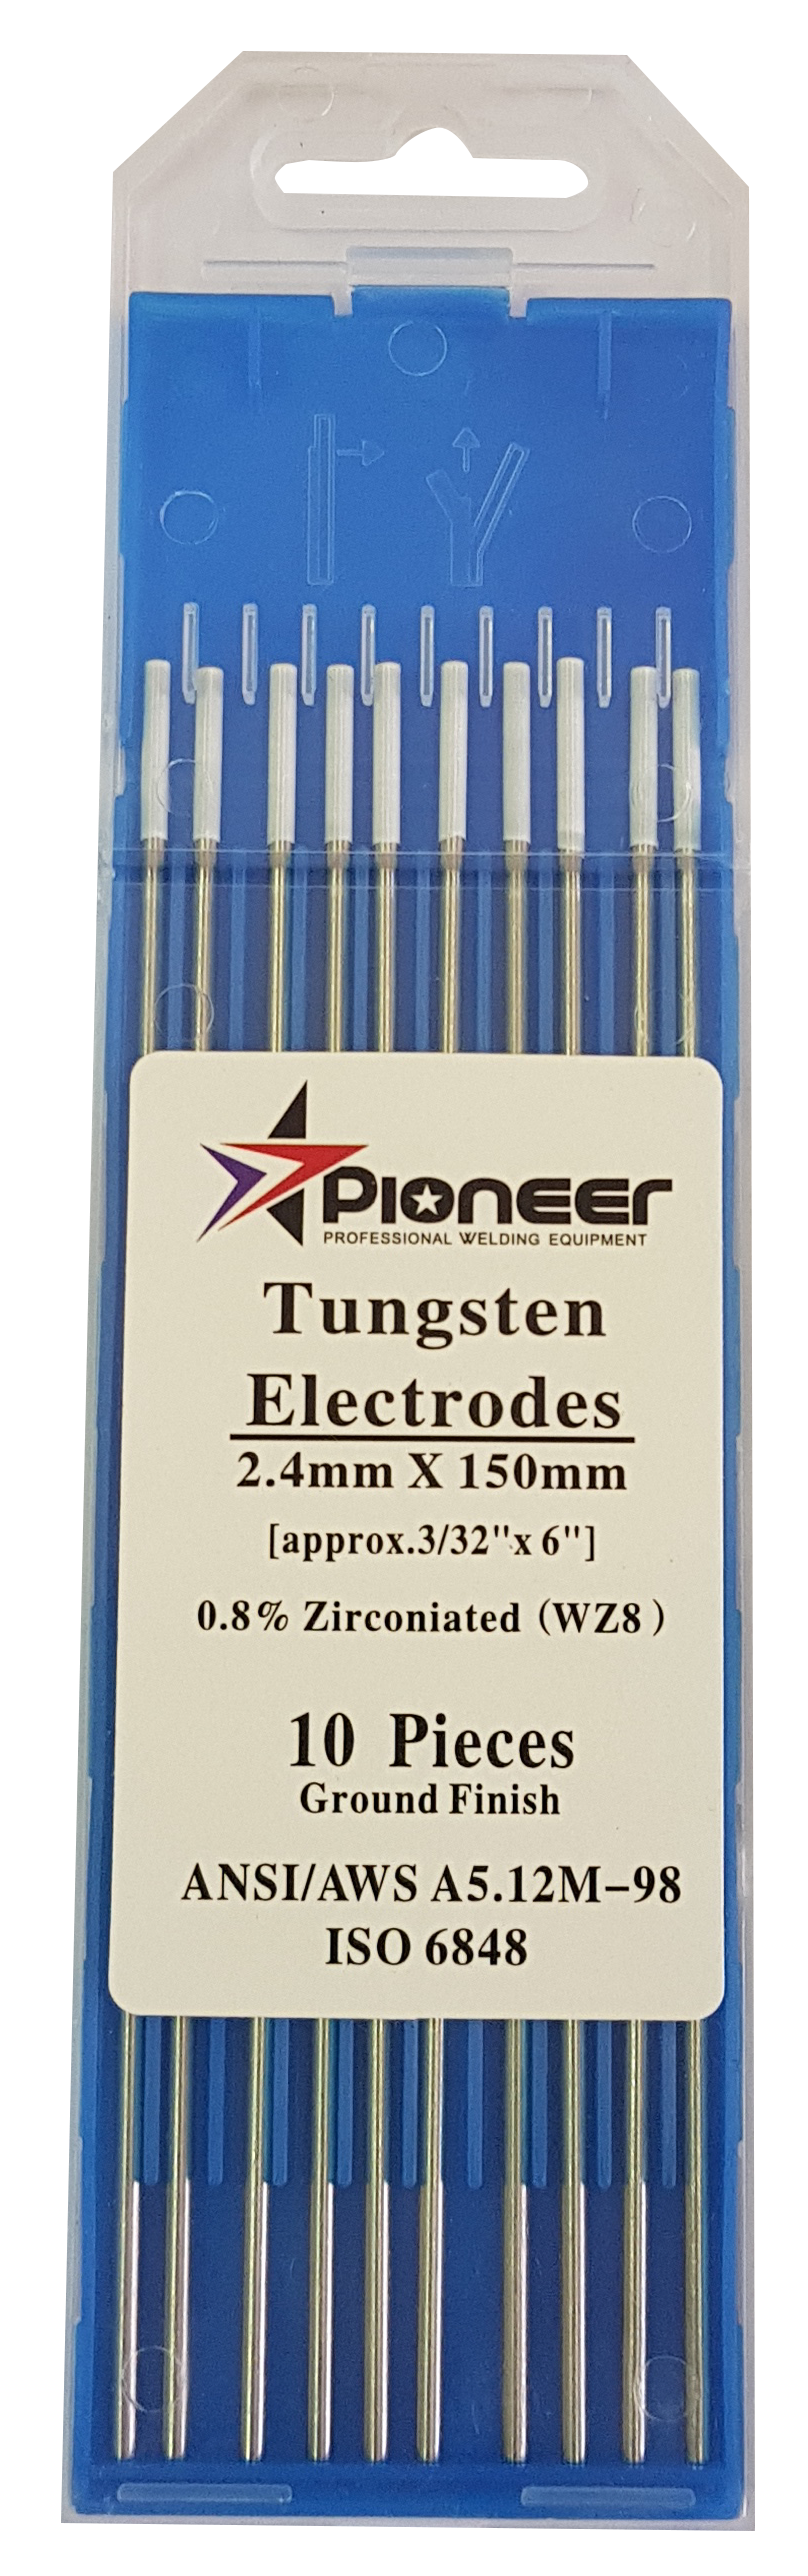 PIONEER Tungsten Electrode Zinconiated